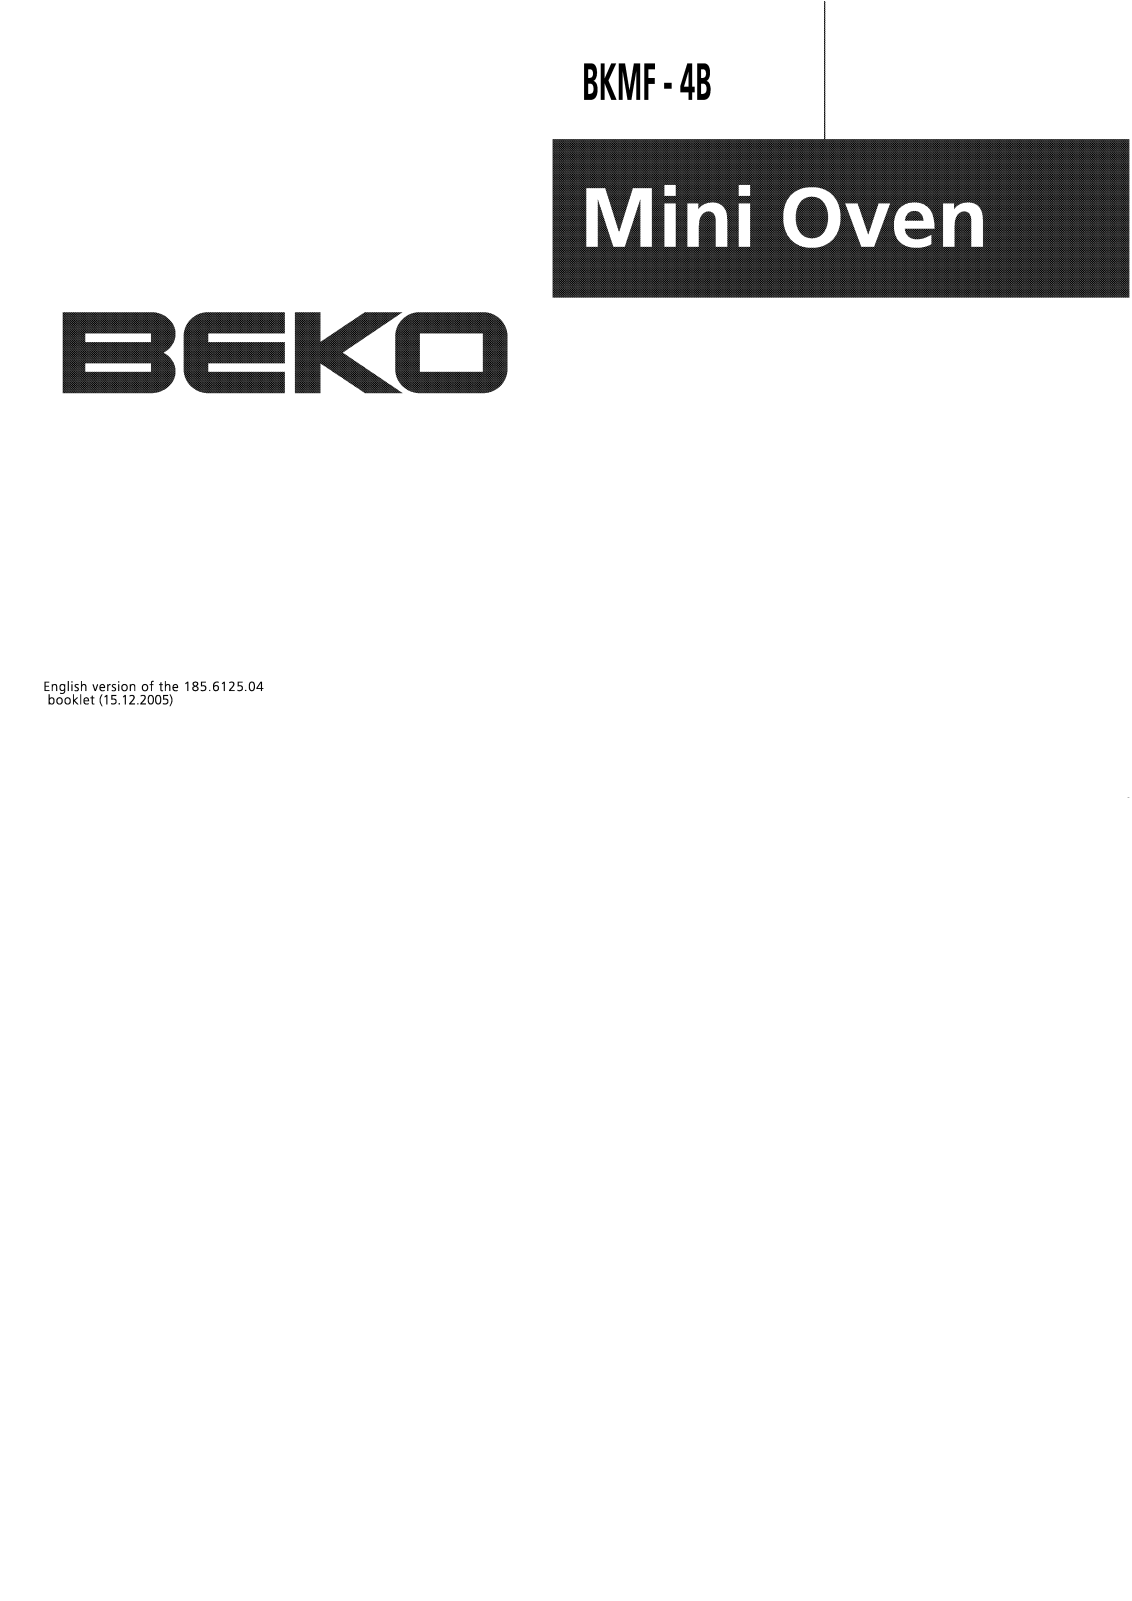 Beko BKMF-4B User Manual